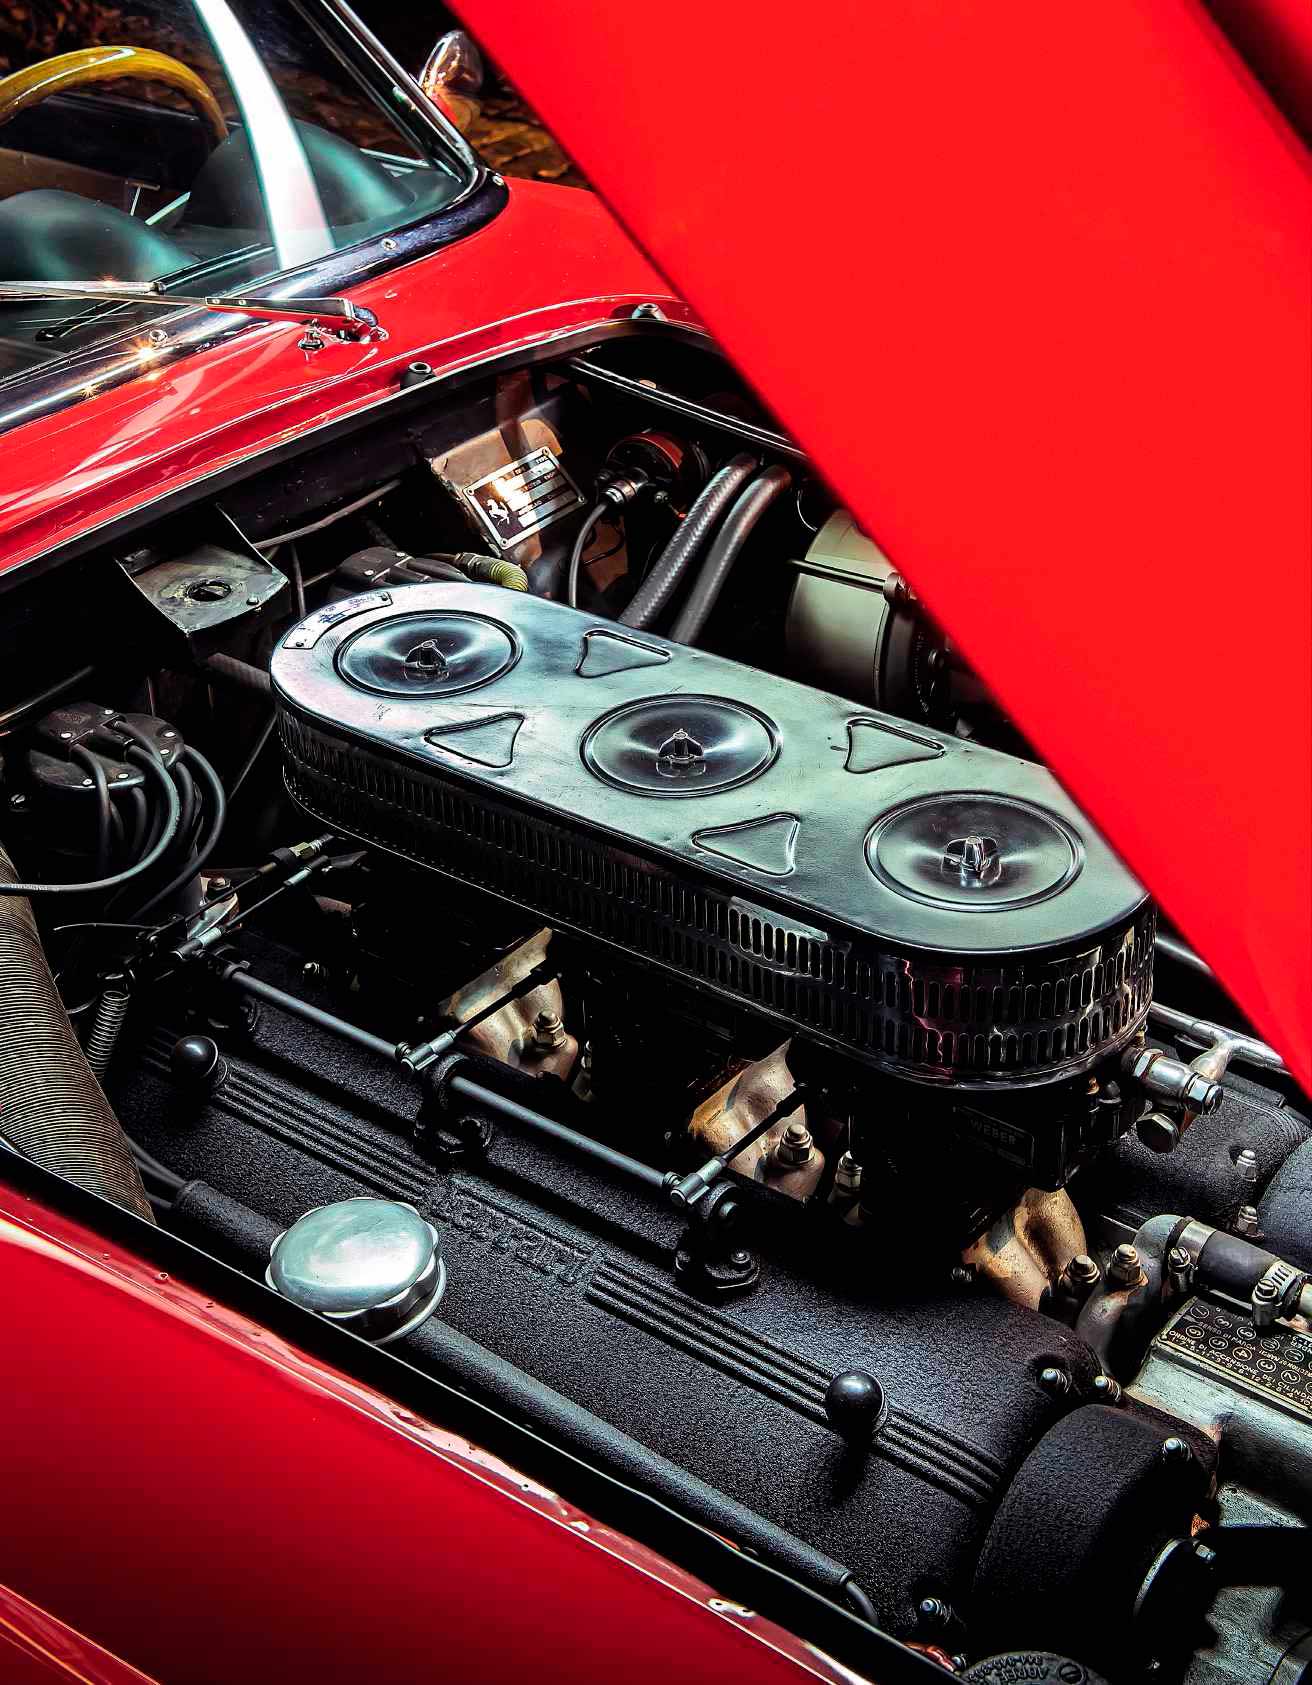 1961 Ferrari 250 GT California Spyder engine V12 280bhp